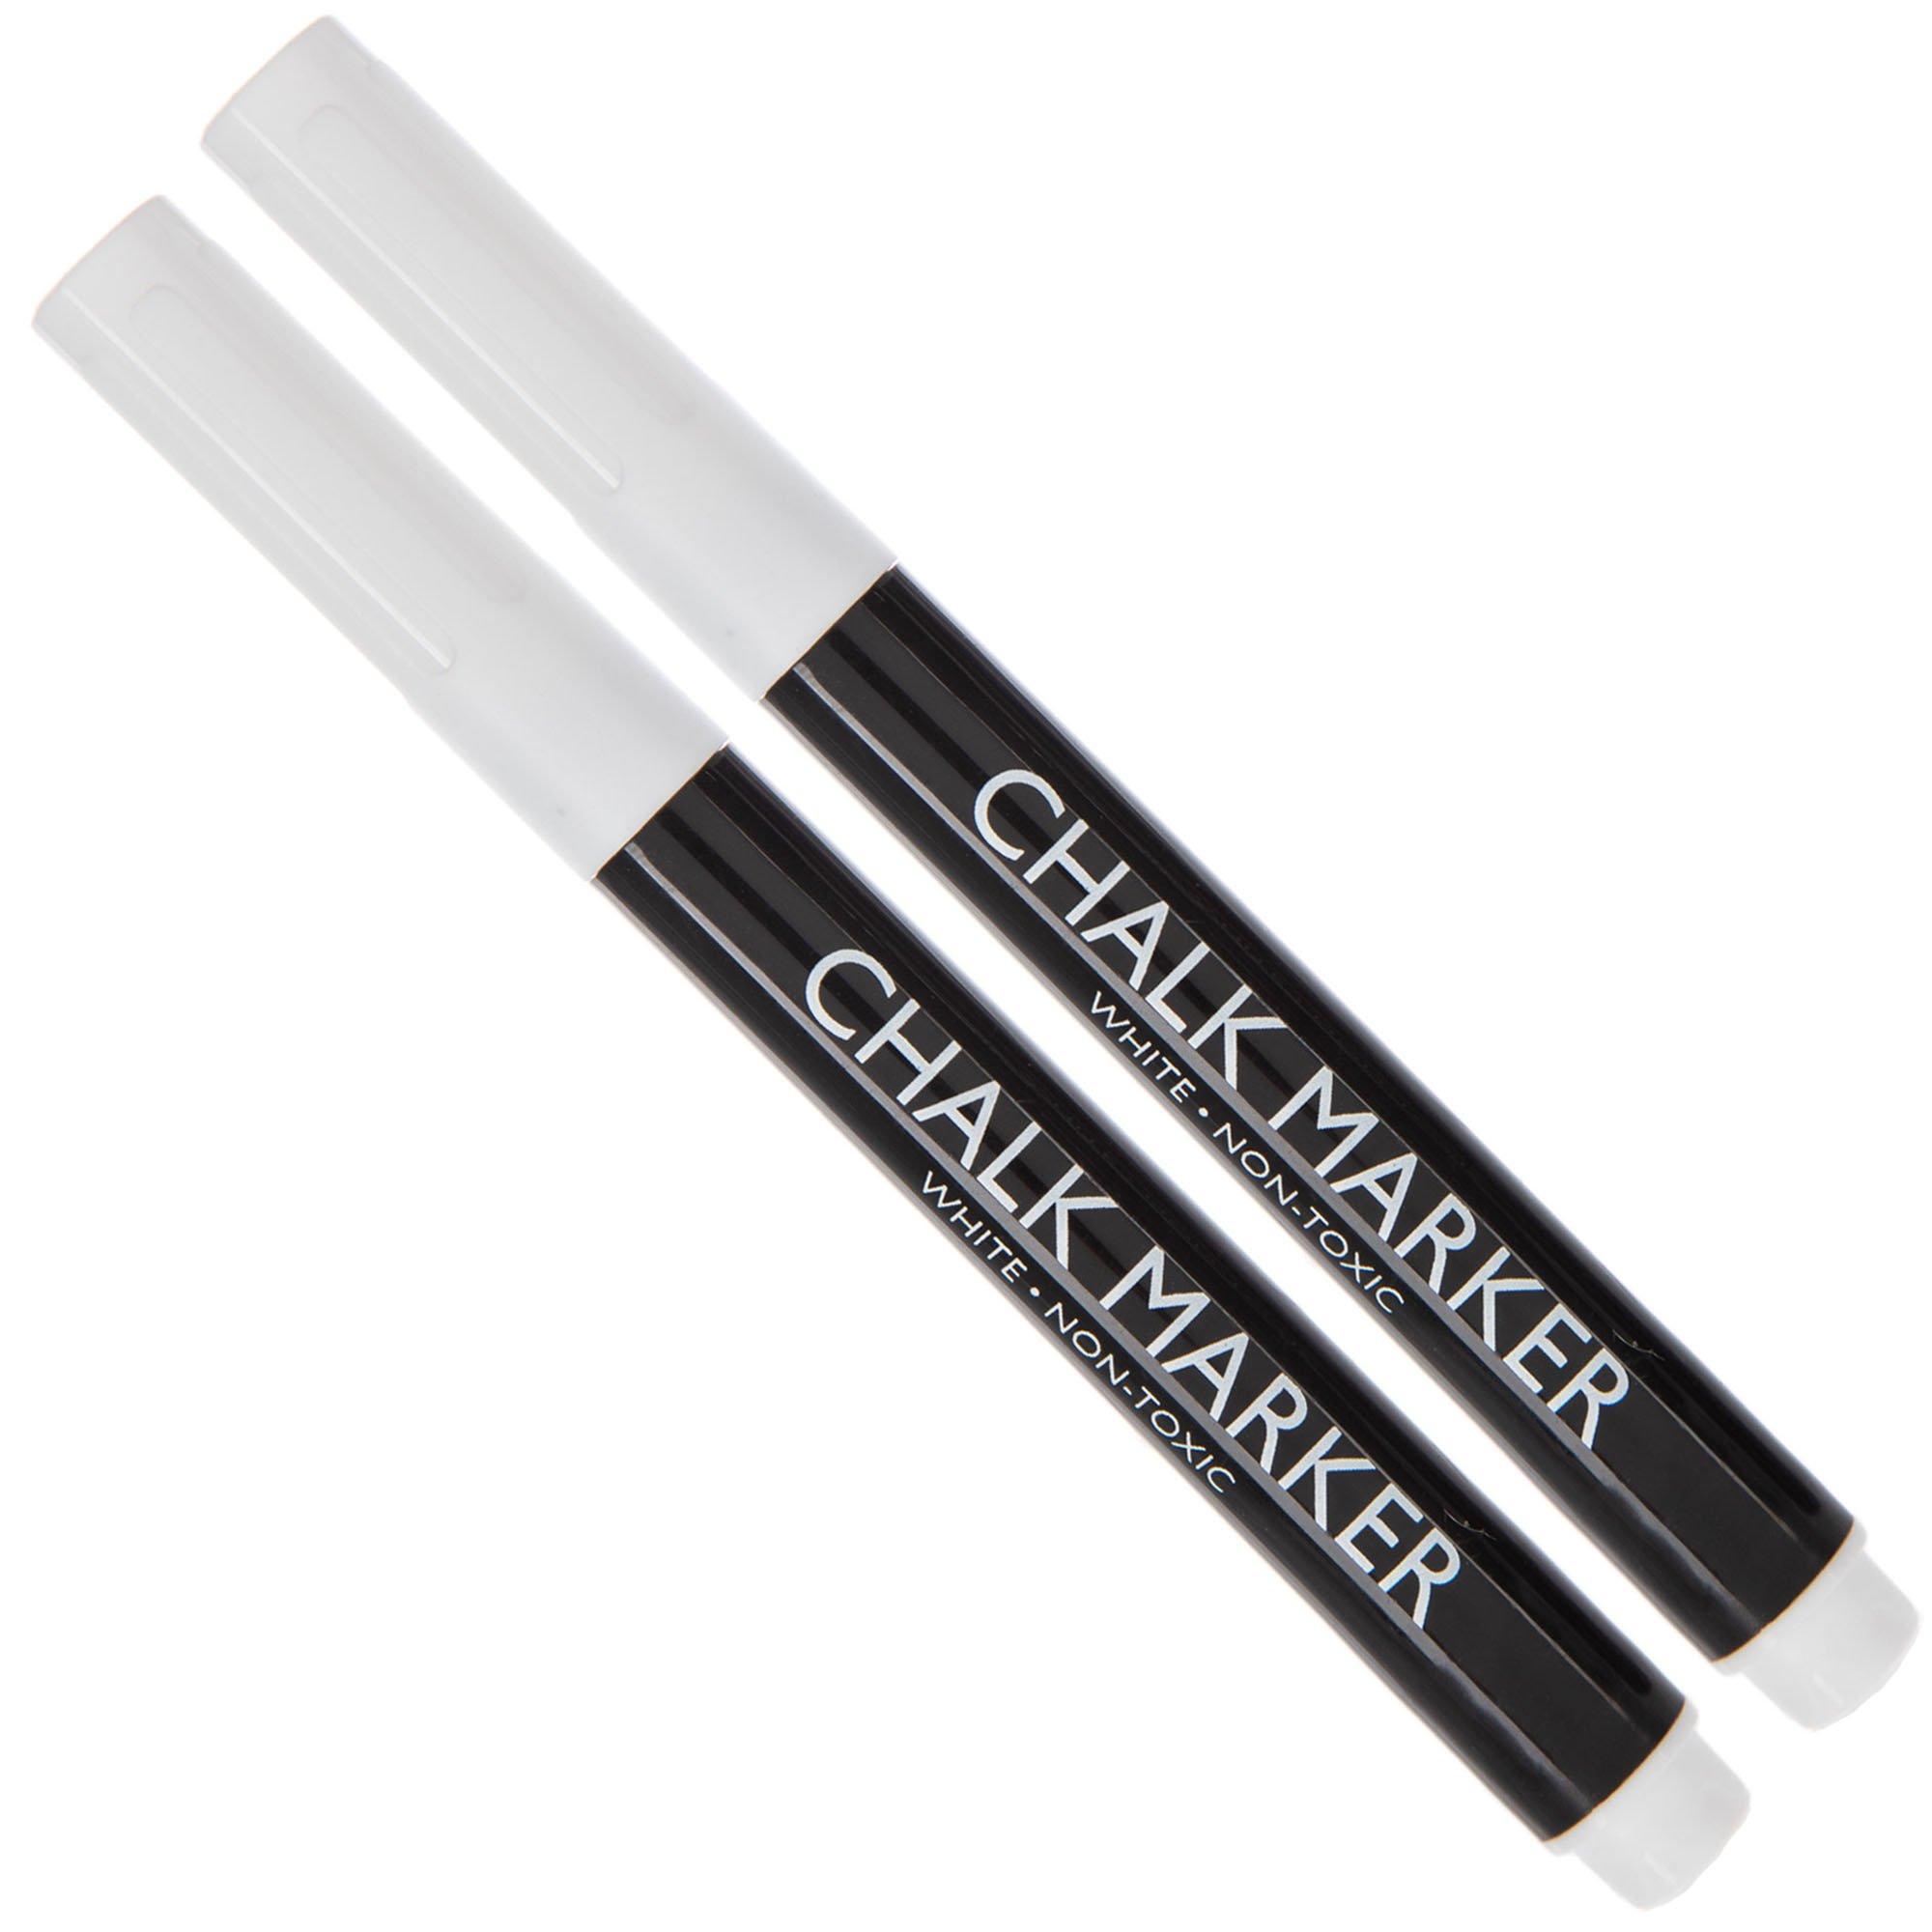 like it Liquid Chalk Markers 8 Pcs Chalkboard Marker Erasable on Black